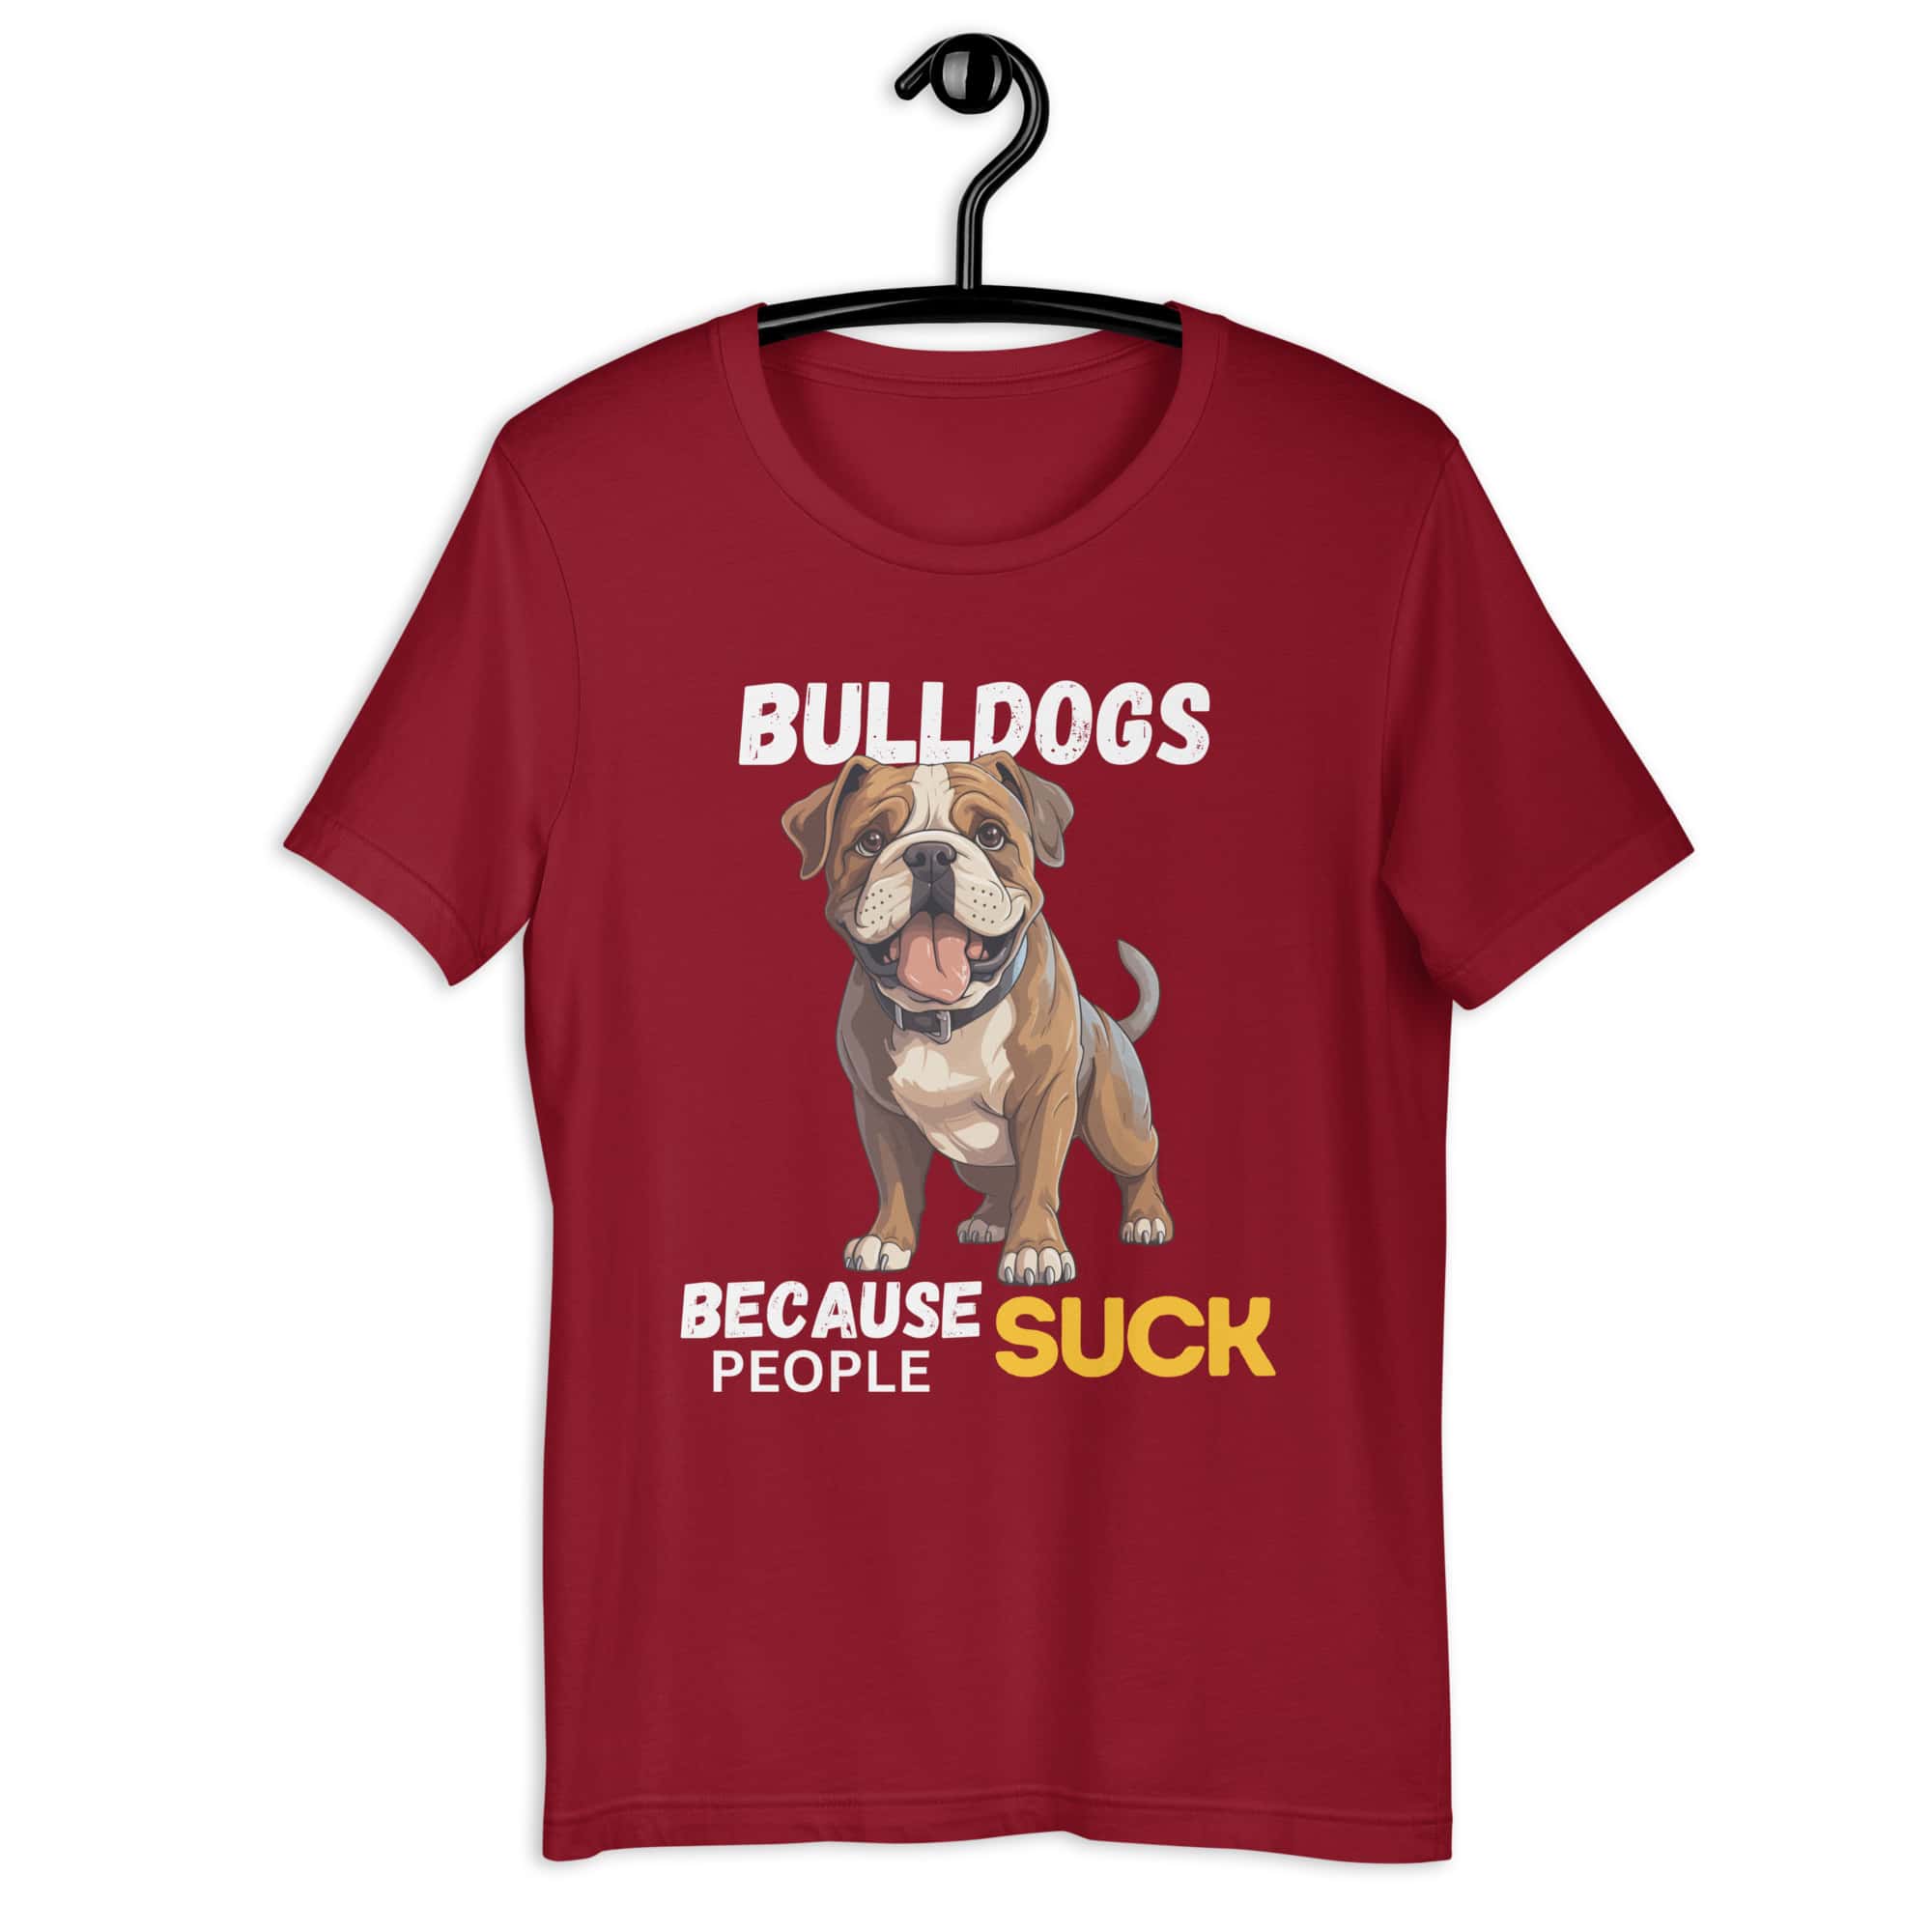 Bulldogs Because People Suck Unisex T-Shirt maroon